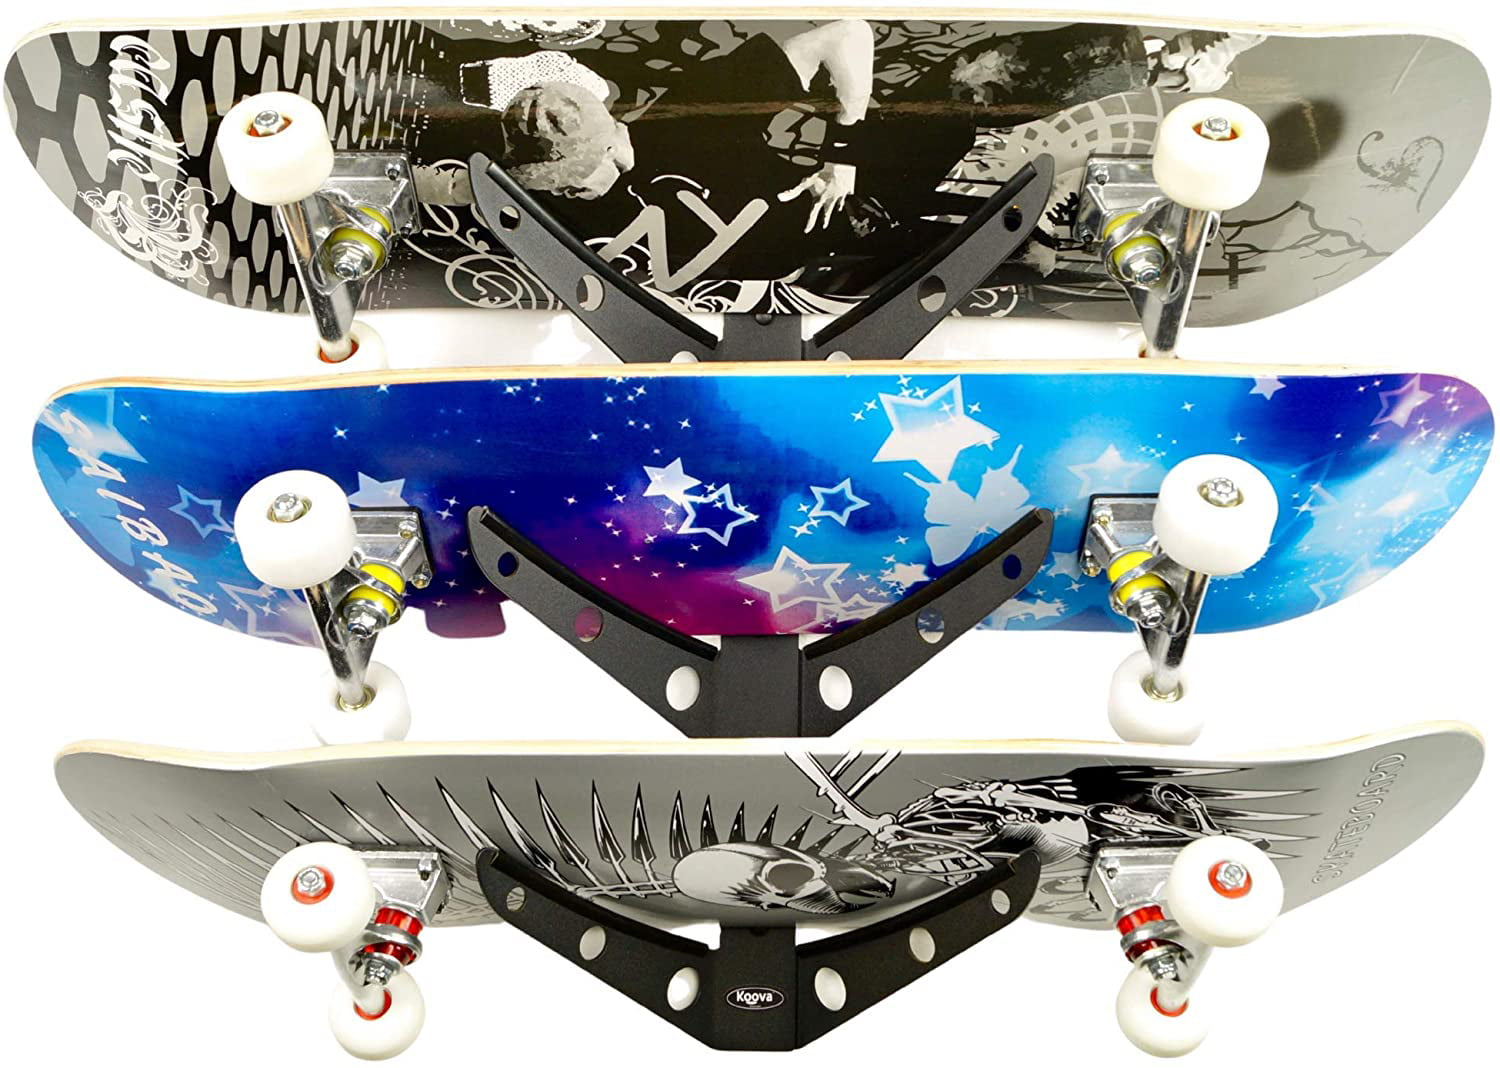 Ski snowboard skateboard wakeboard sport storage display holder wall mount rack 